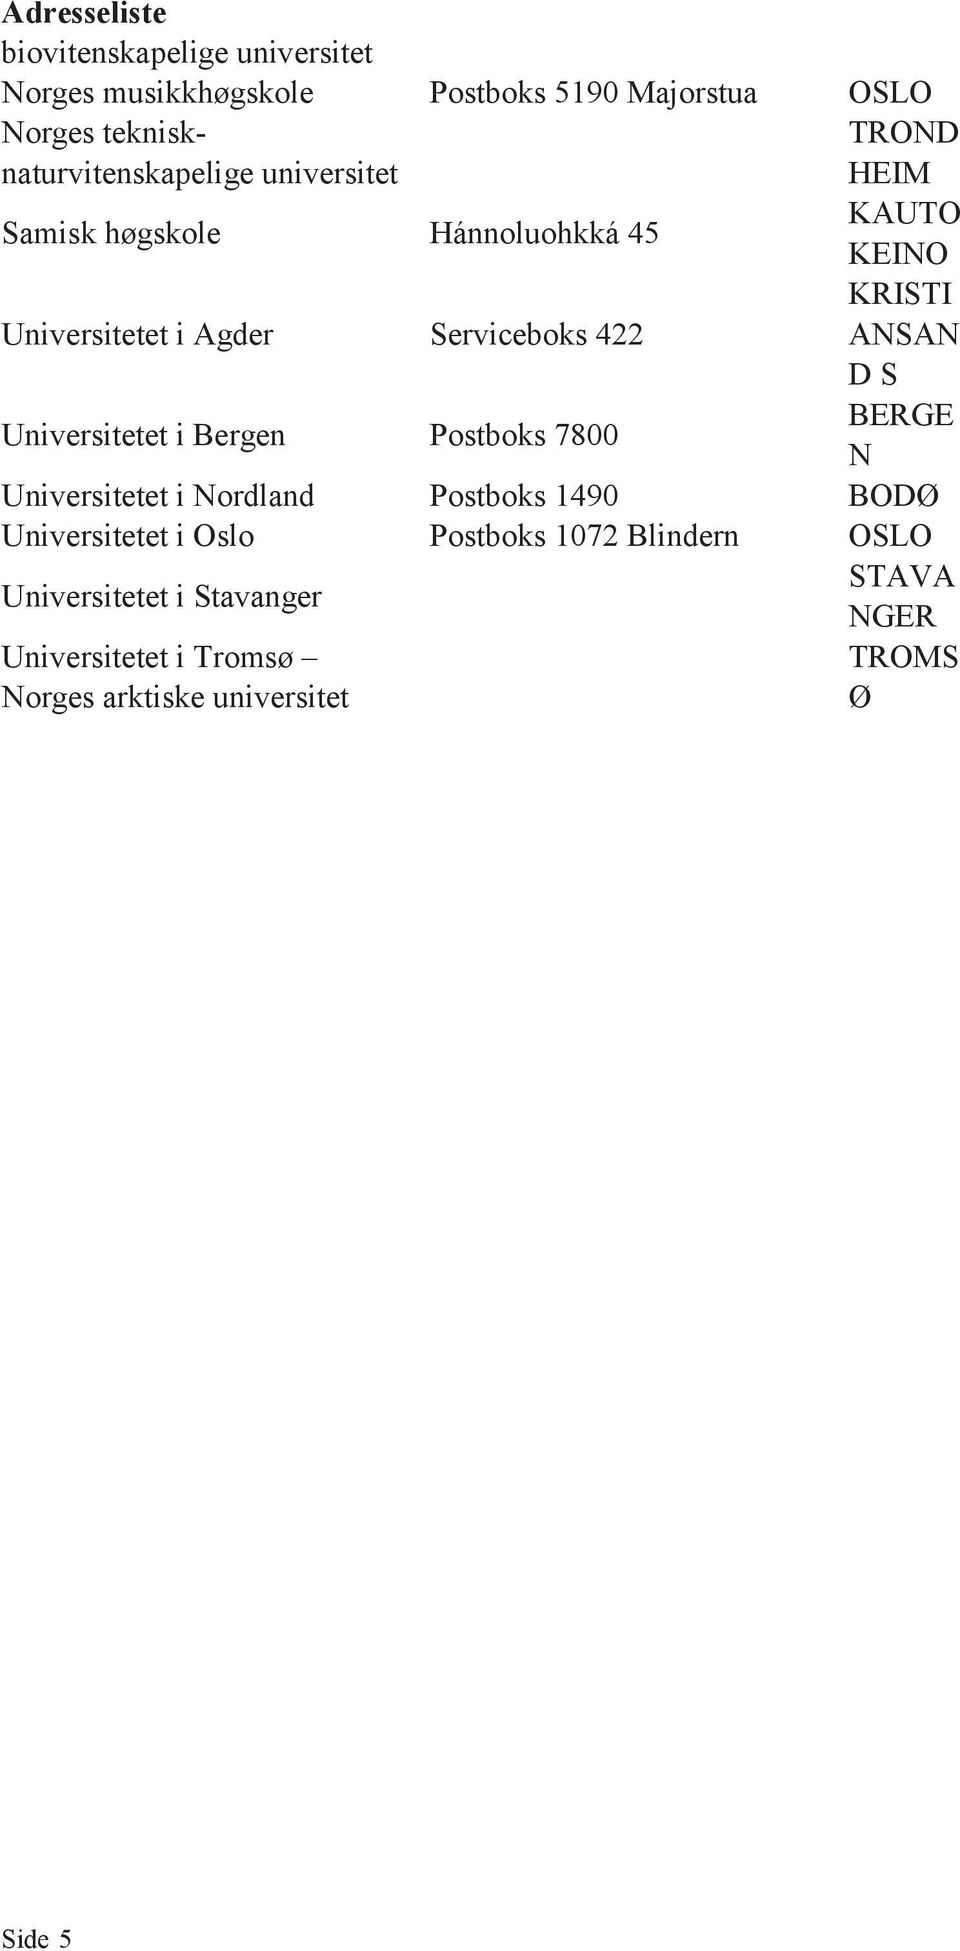 Serviceboks 422 KRISTI ANSAN D S Universitetet i Bergen Postboks 7800 BERGE N Universitetet i Nordland Postboks 1490 BODØ